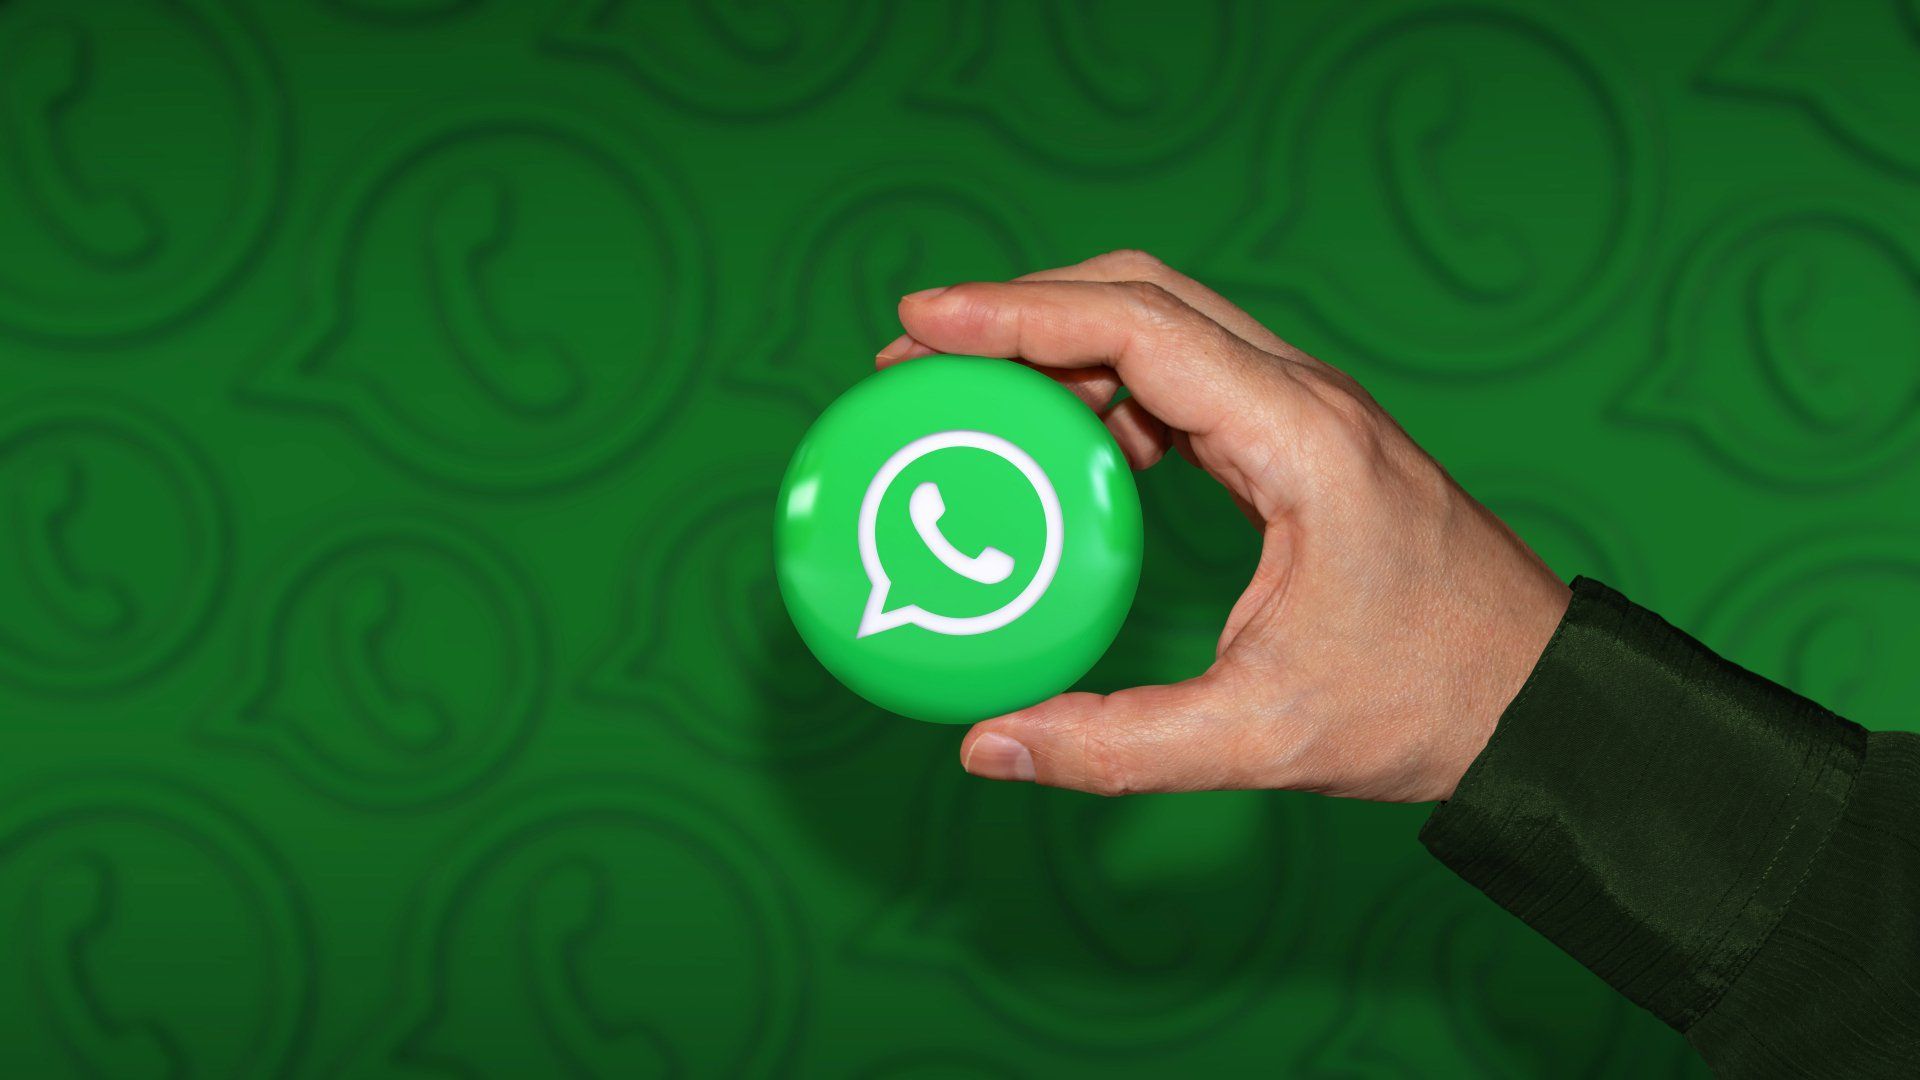 Una mano sosteniendo una insignia brillante del logo de whatsapp